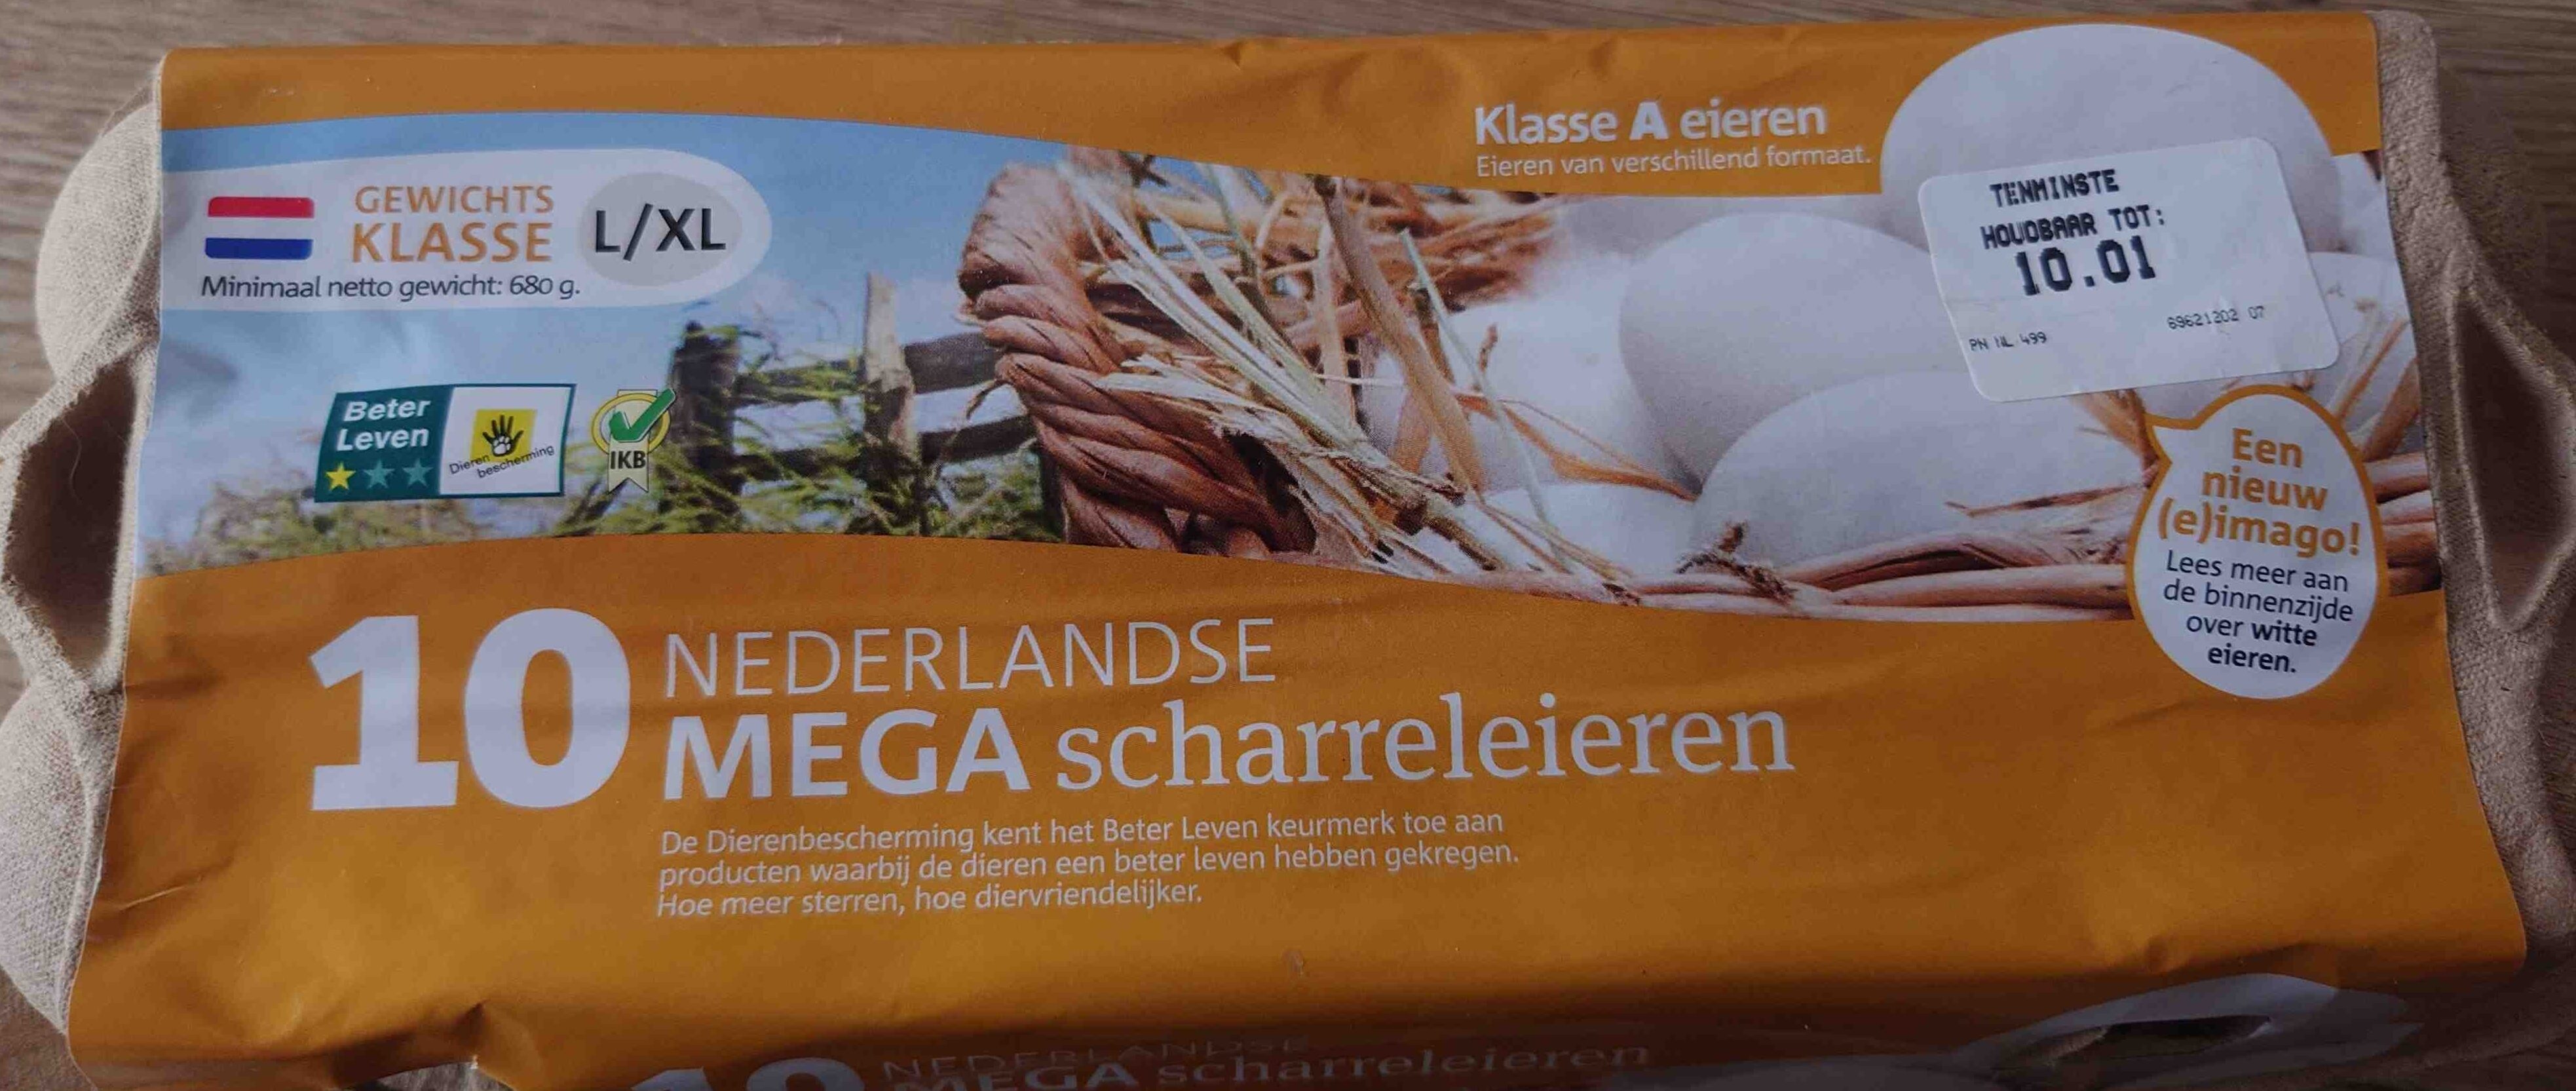 Nederlandse MEGA scharreleieren - Product - nl